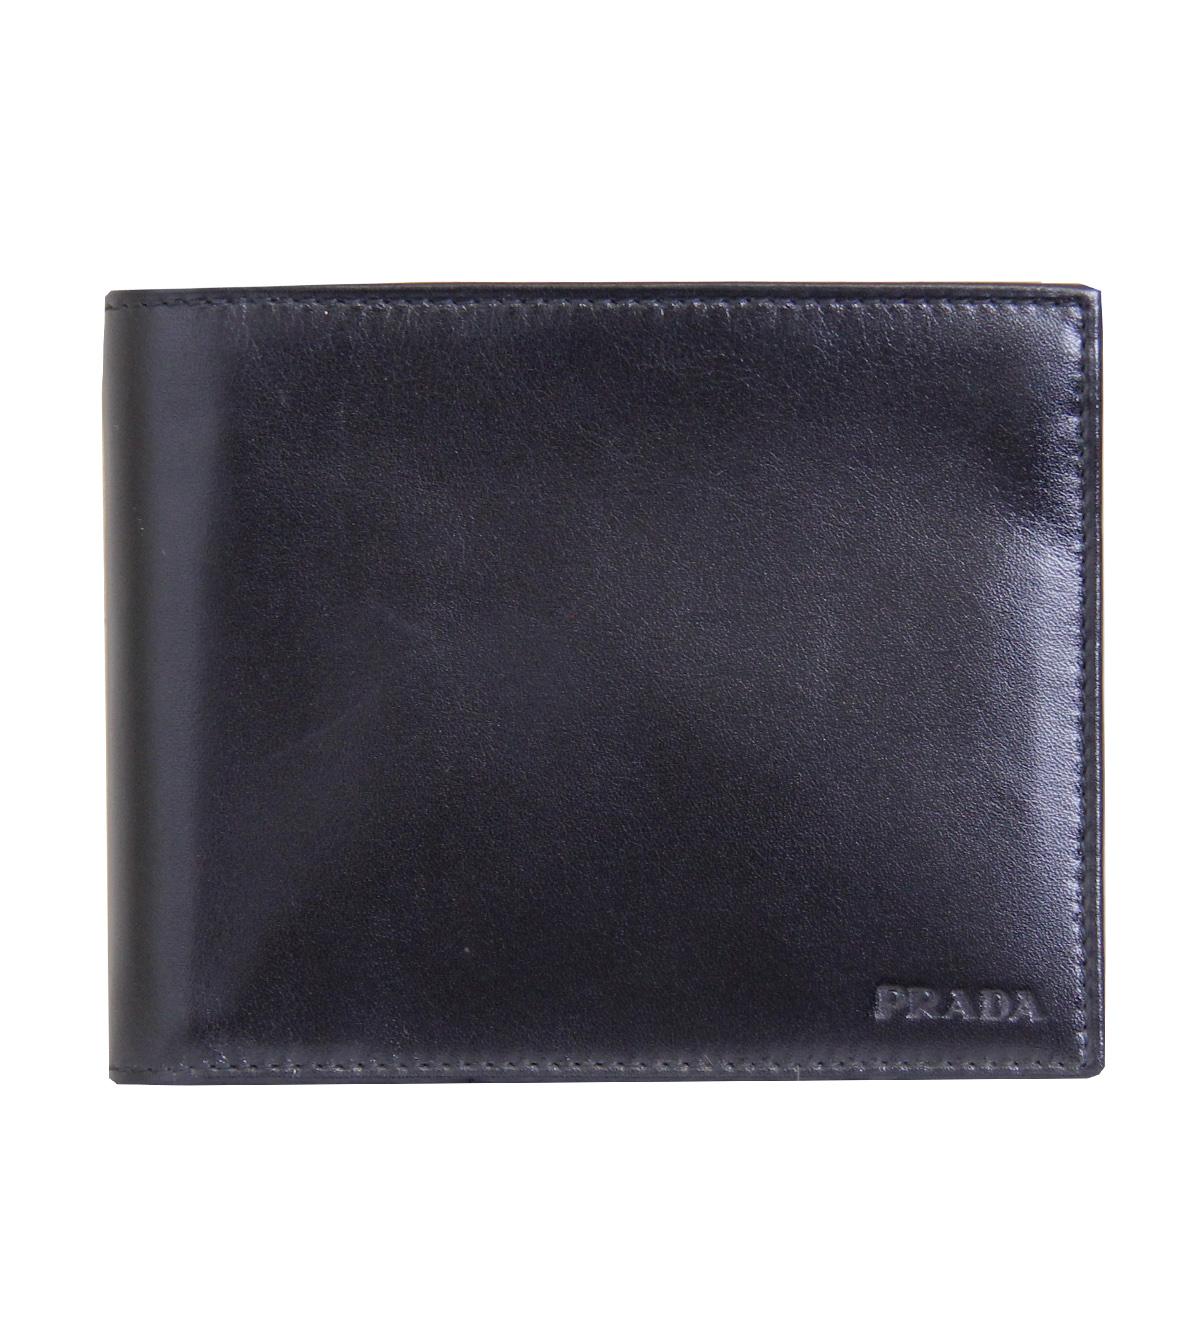 Foto Prada Black Soft Large Leather Wallet foto 3670